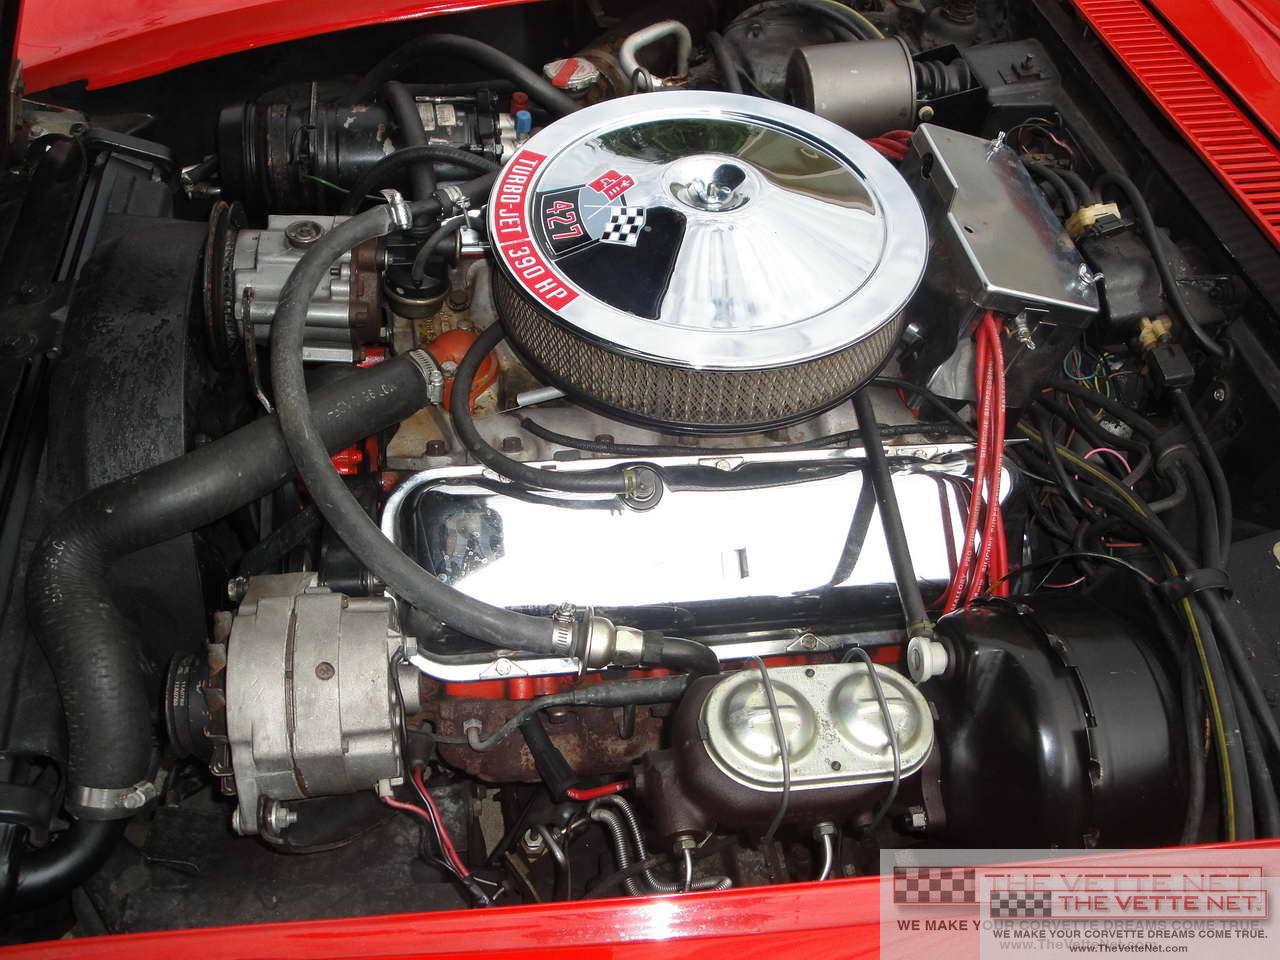 1969 Corvette Convertible Monza Red Code 974